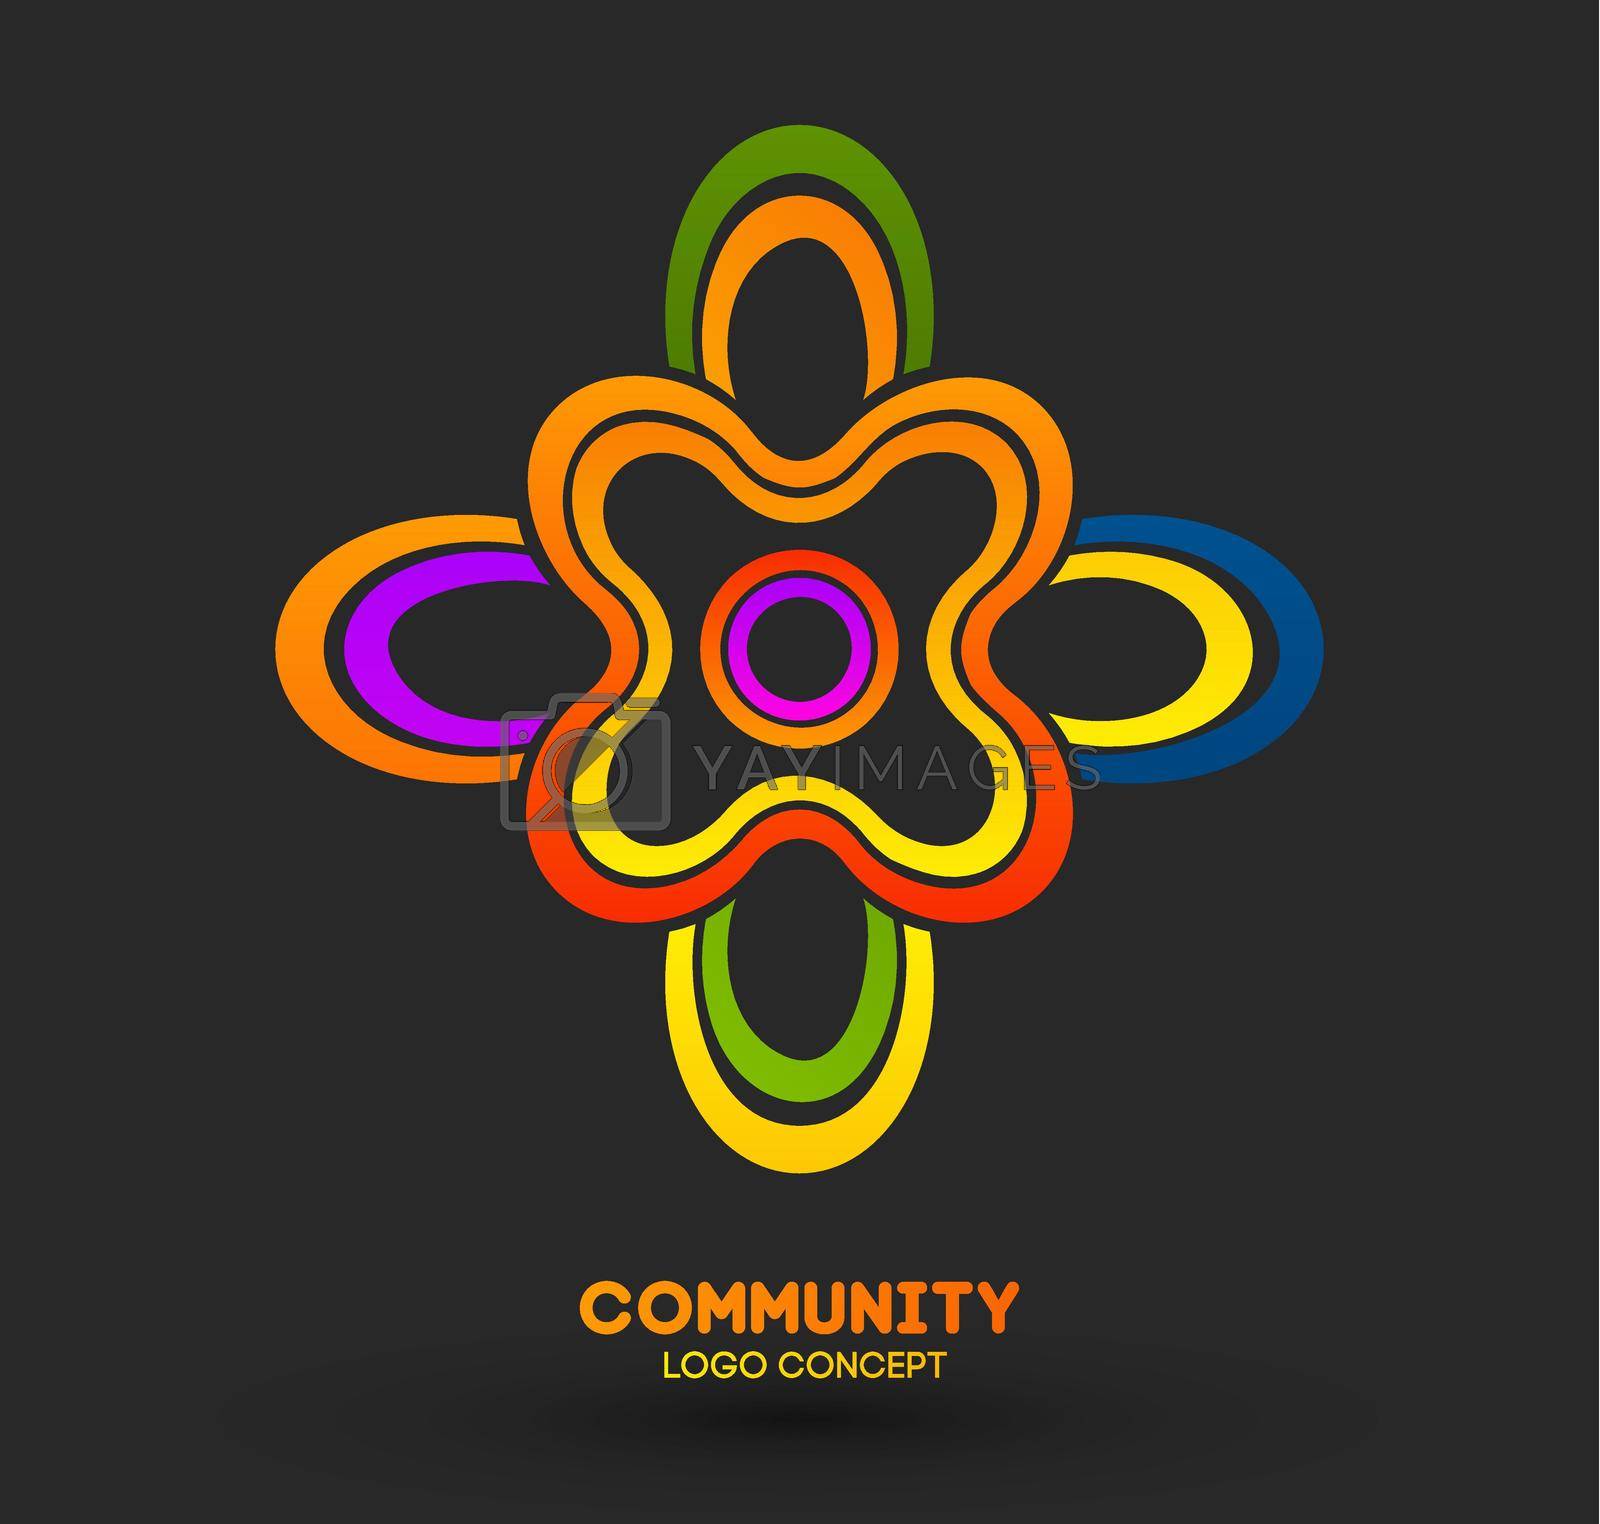 United community logo. Logo design company vector. Abstract modern icon shape idea.